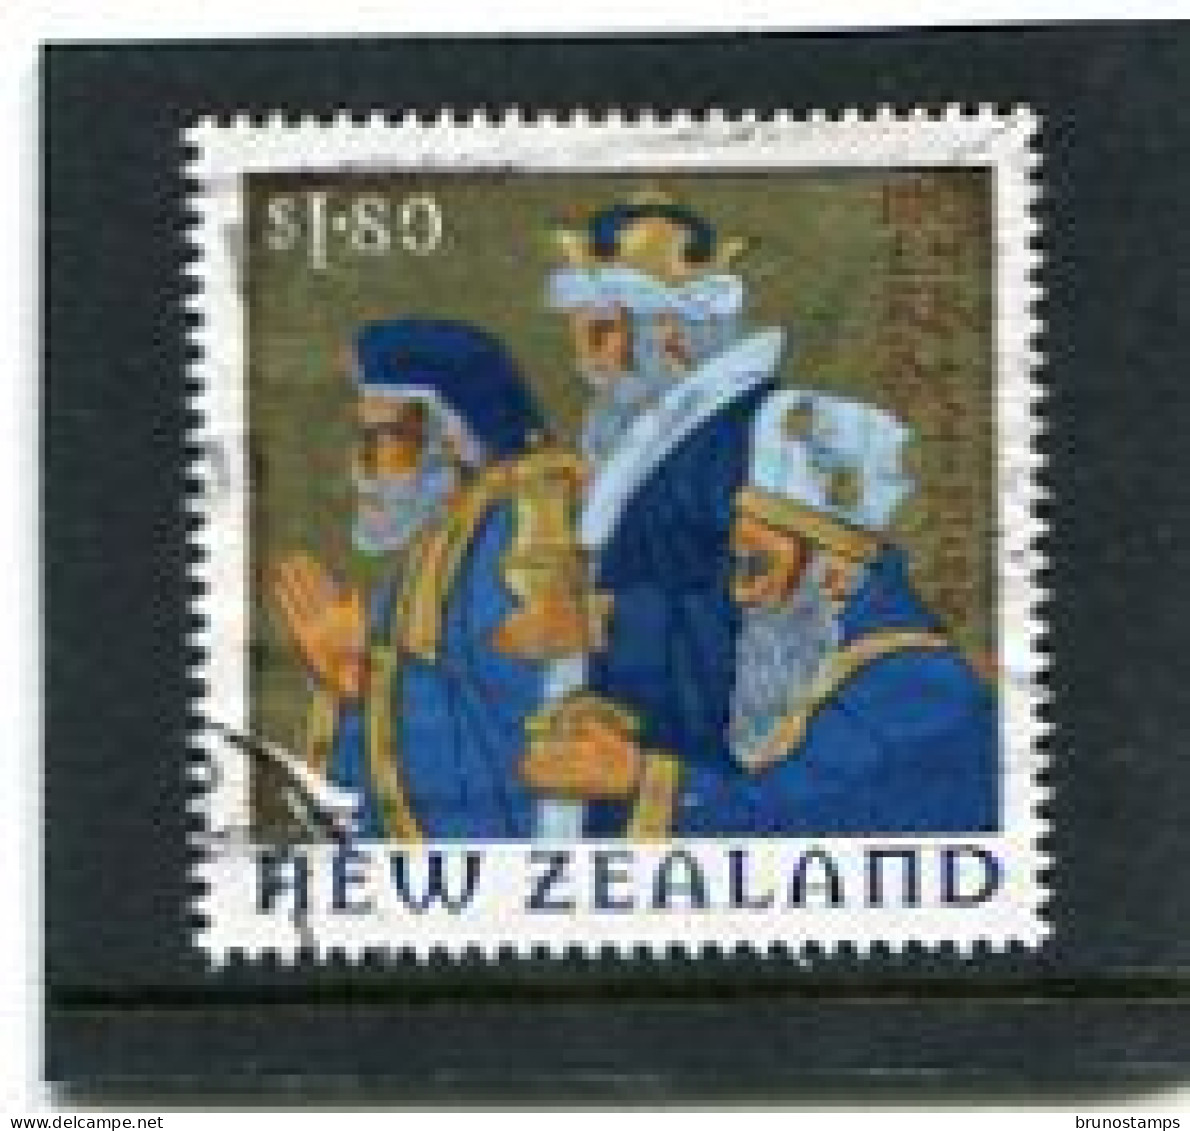 NEW ZEALAND - 2009  1.80$  CHRISTMAS   FINE  USED - Gebruikt